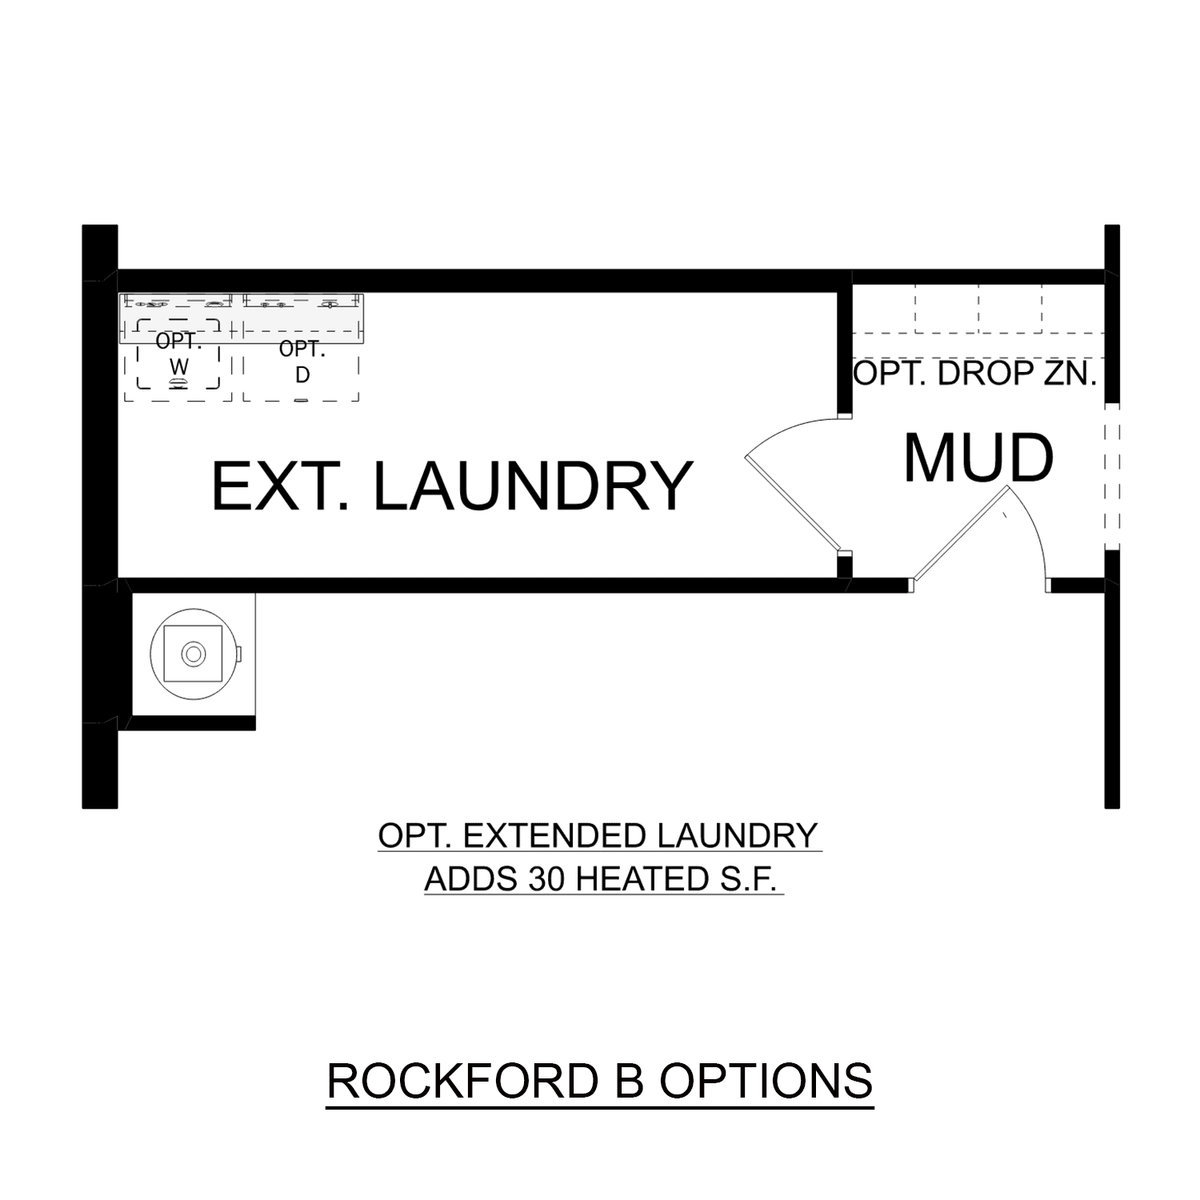 2 - The Rockford B floor plan layout for 2104 Brandon Dr in Davidson Homes' North Ridge community.